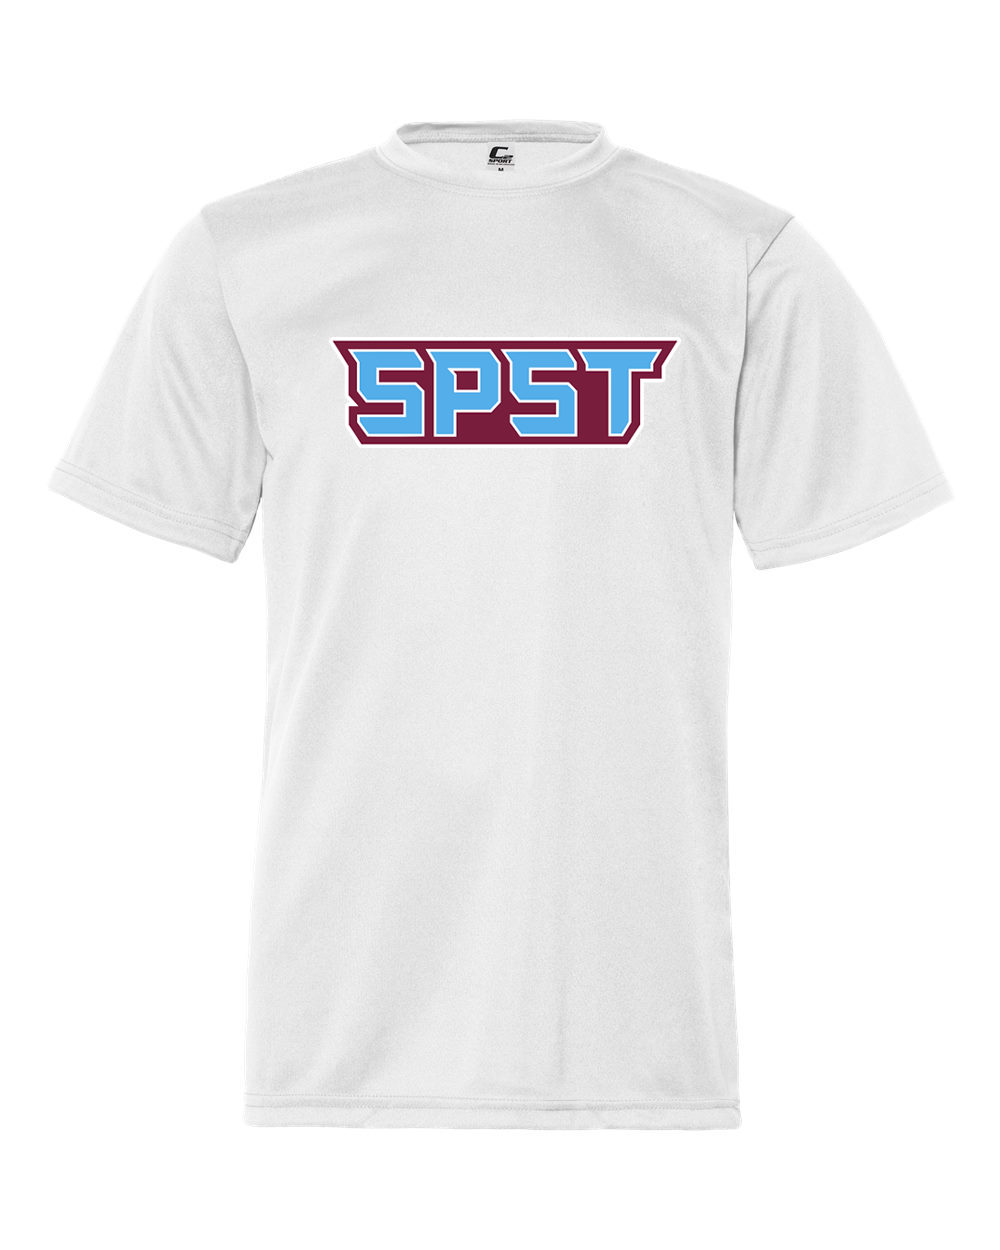 SPST Logo Youth Performance T-Shirt - 5200